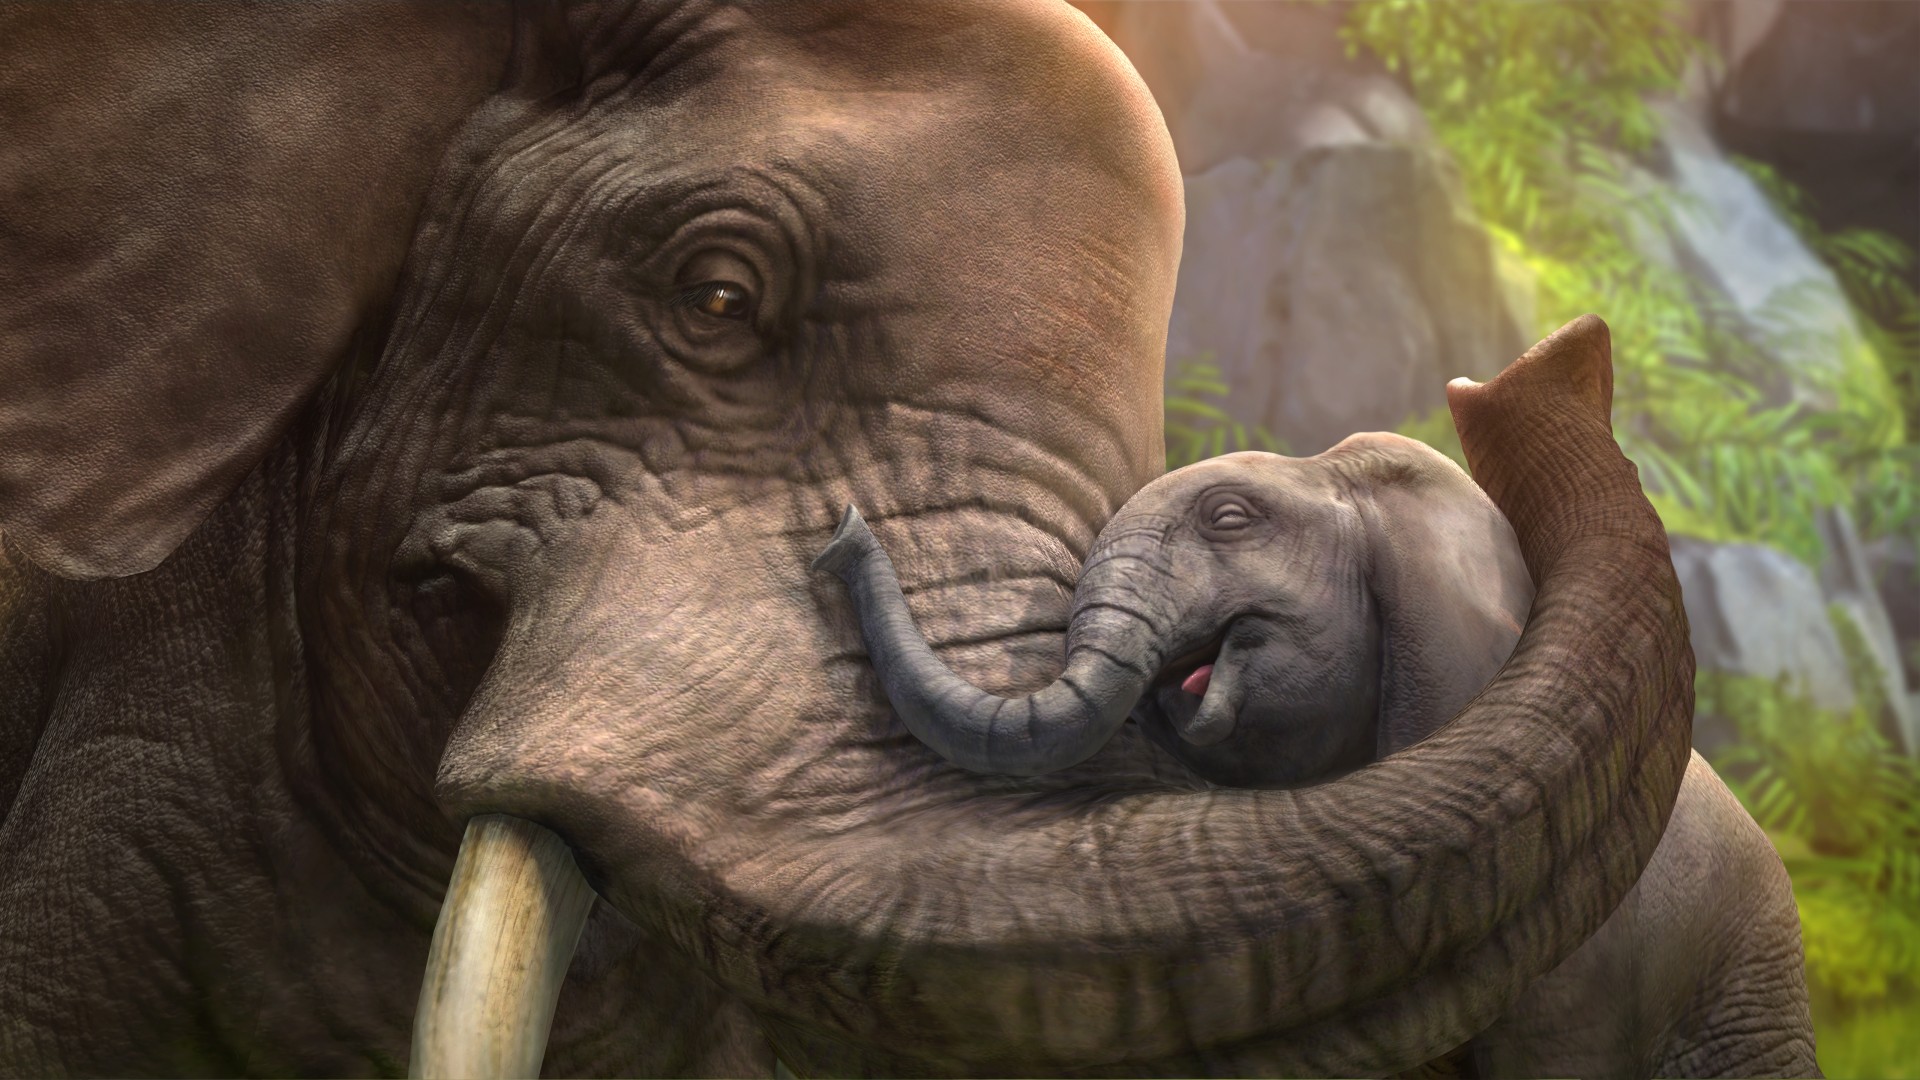 слон, детеныш, животное, серый, арт, Elephant, cub, zoo tycoon, animals, grey, art, tourism (horizontal)